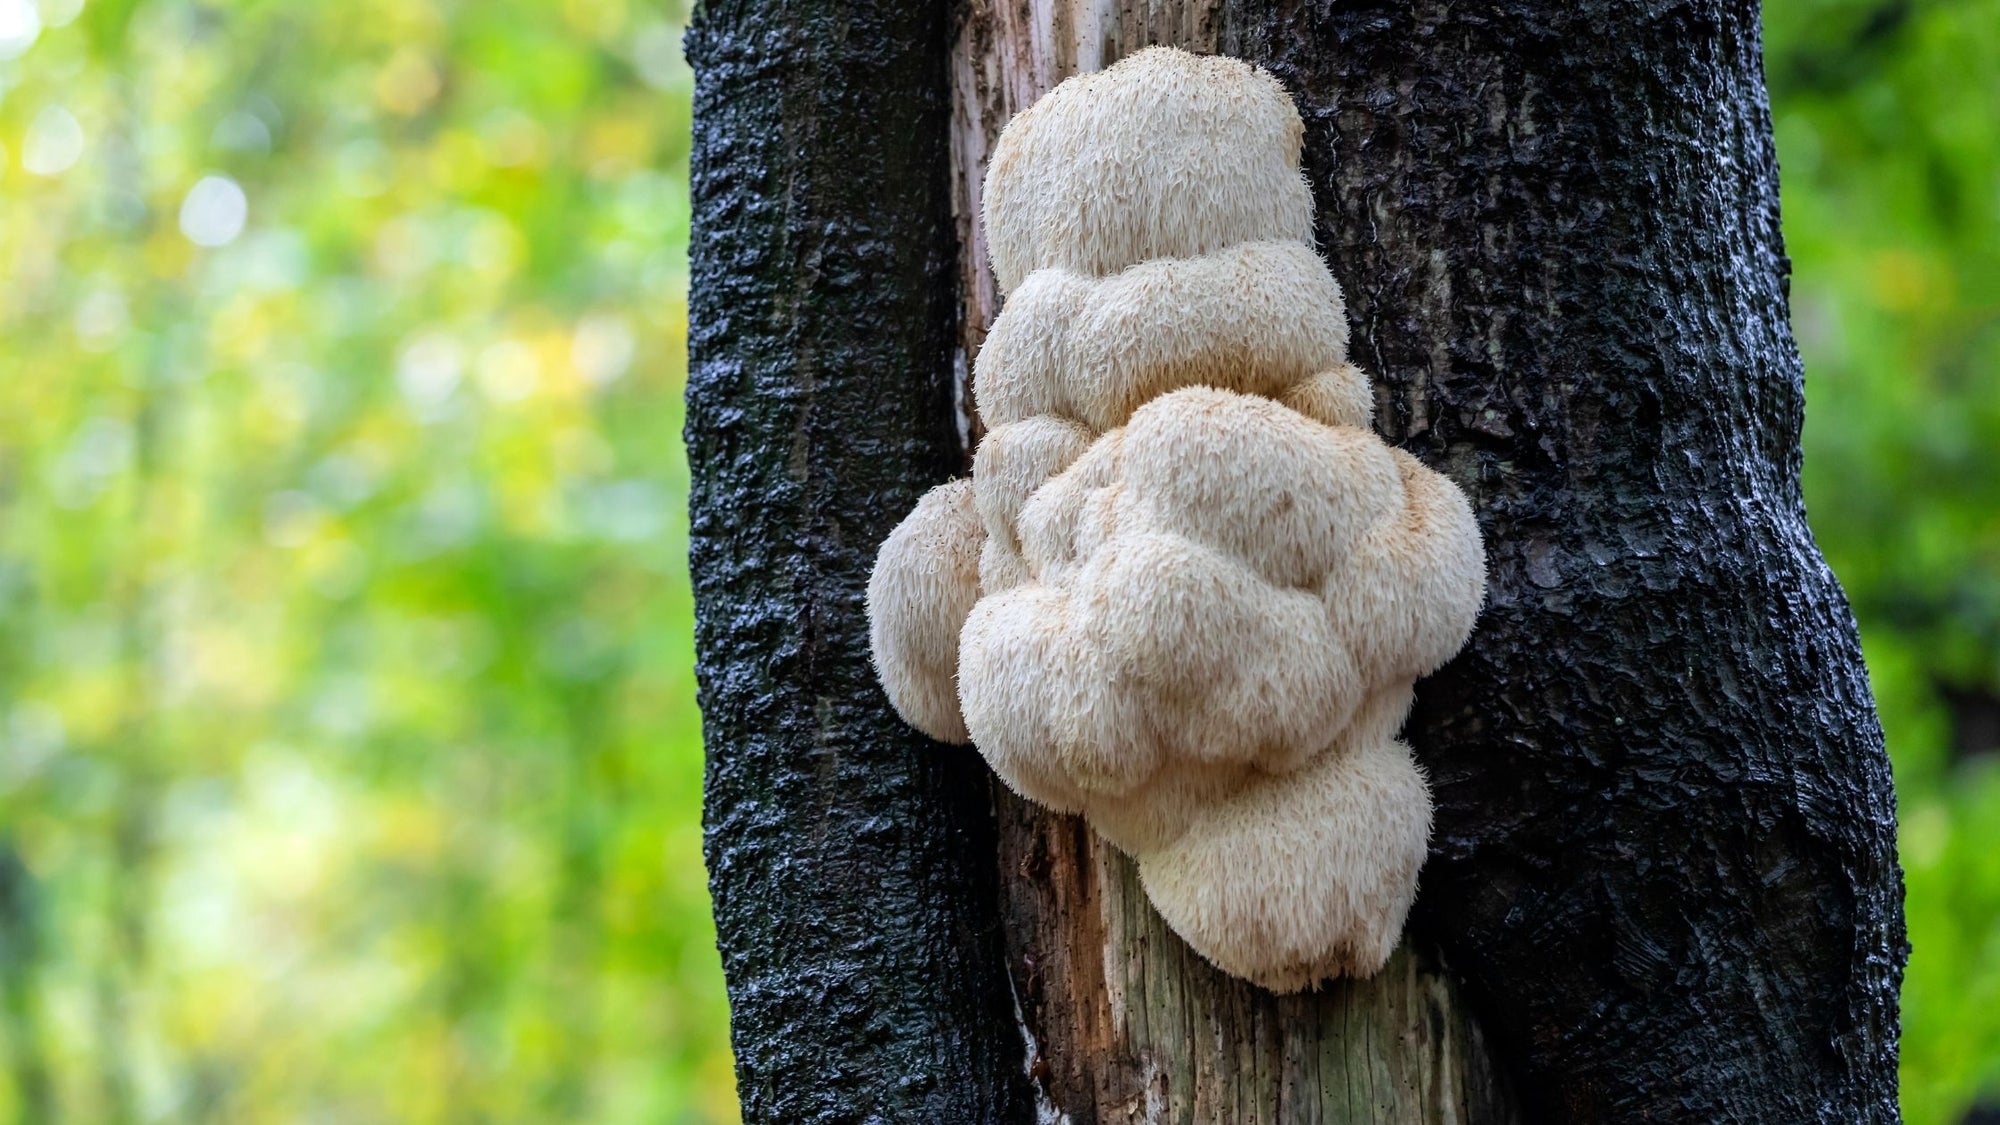 Wild lions mane mushroom growing on a tree trunk